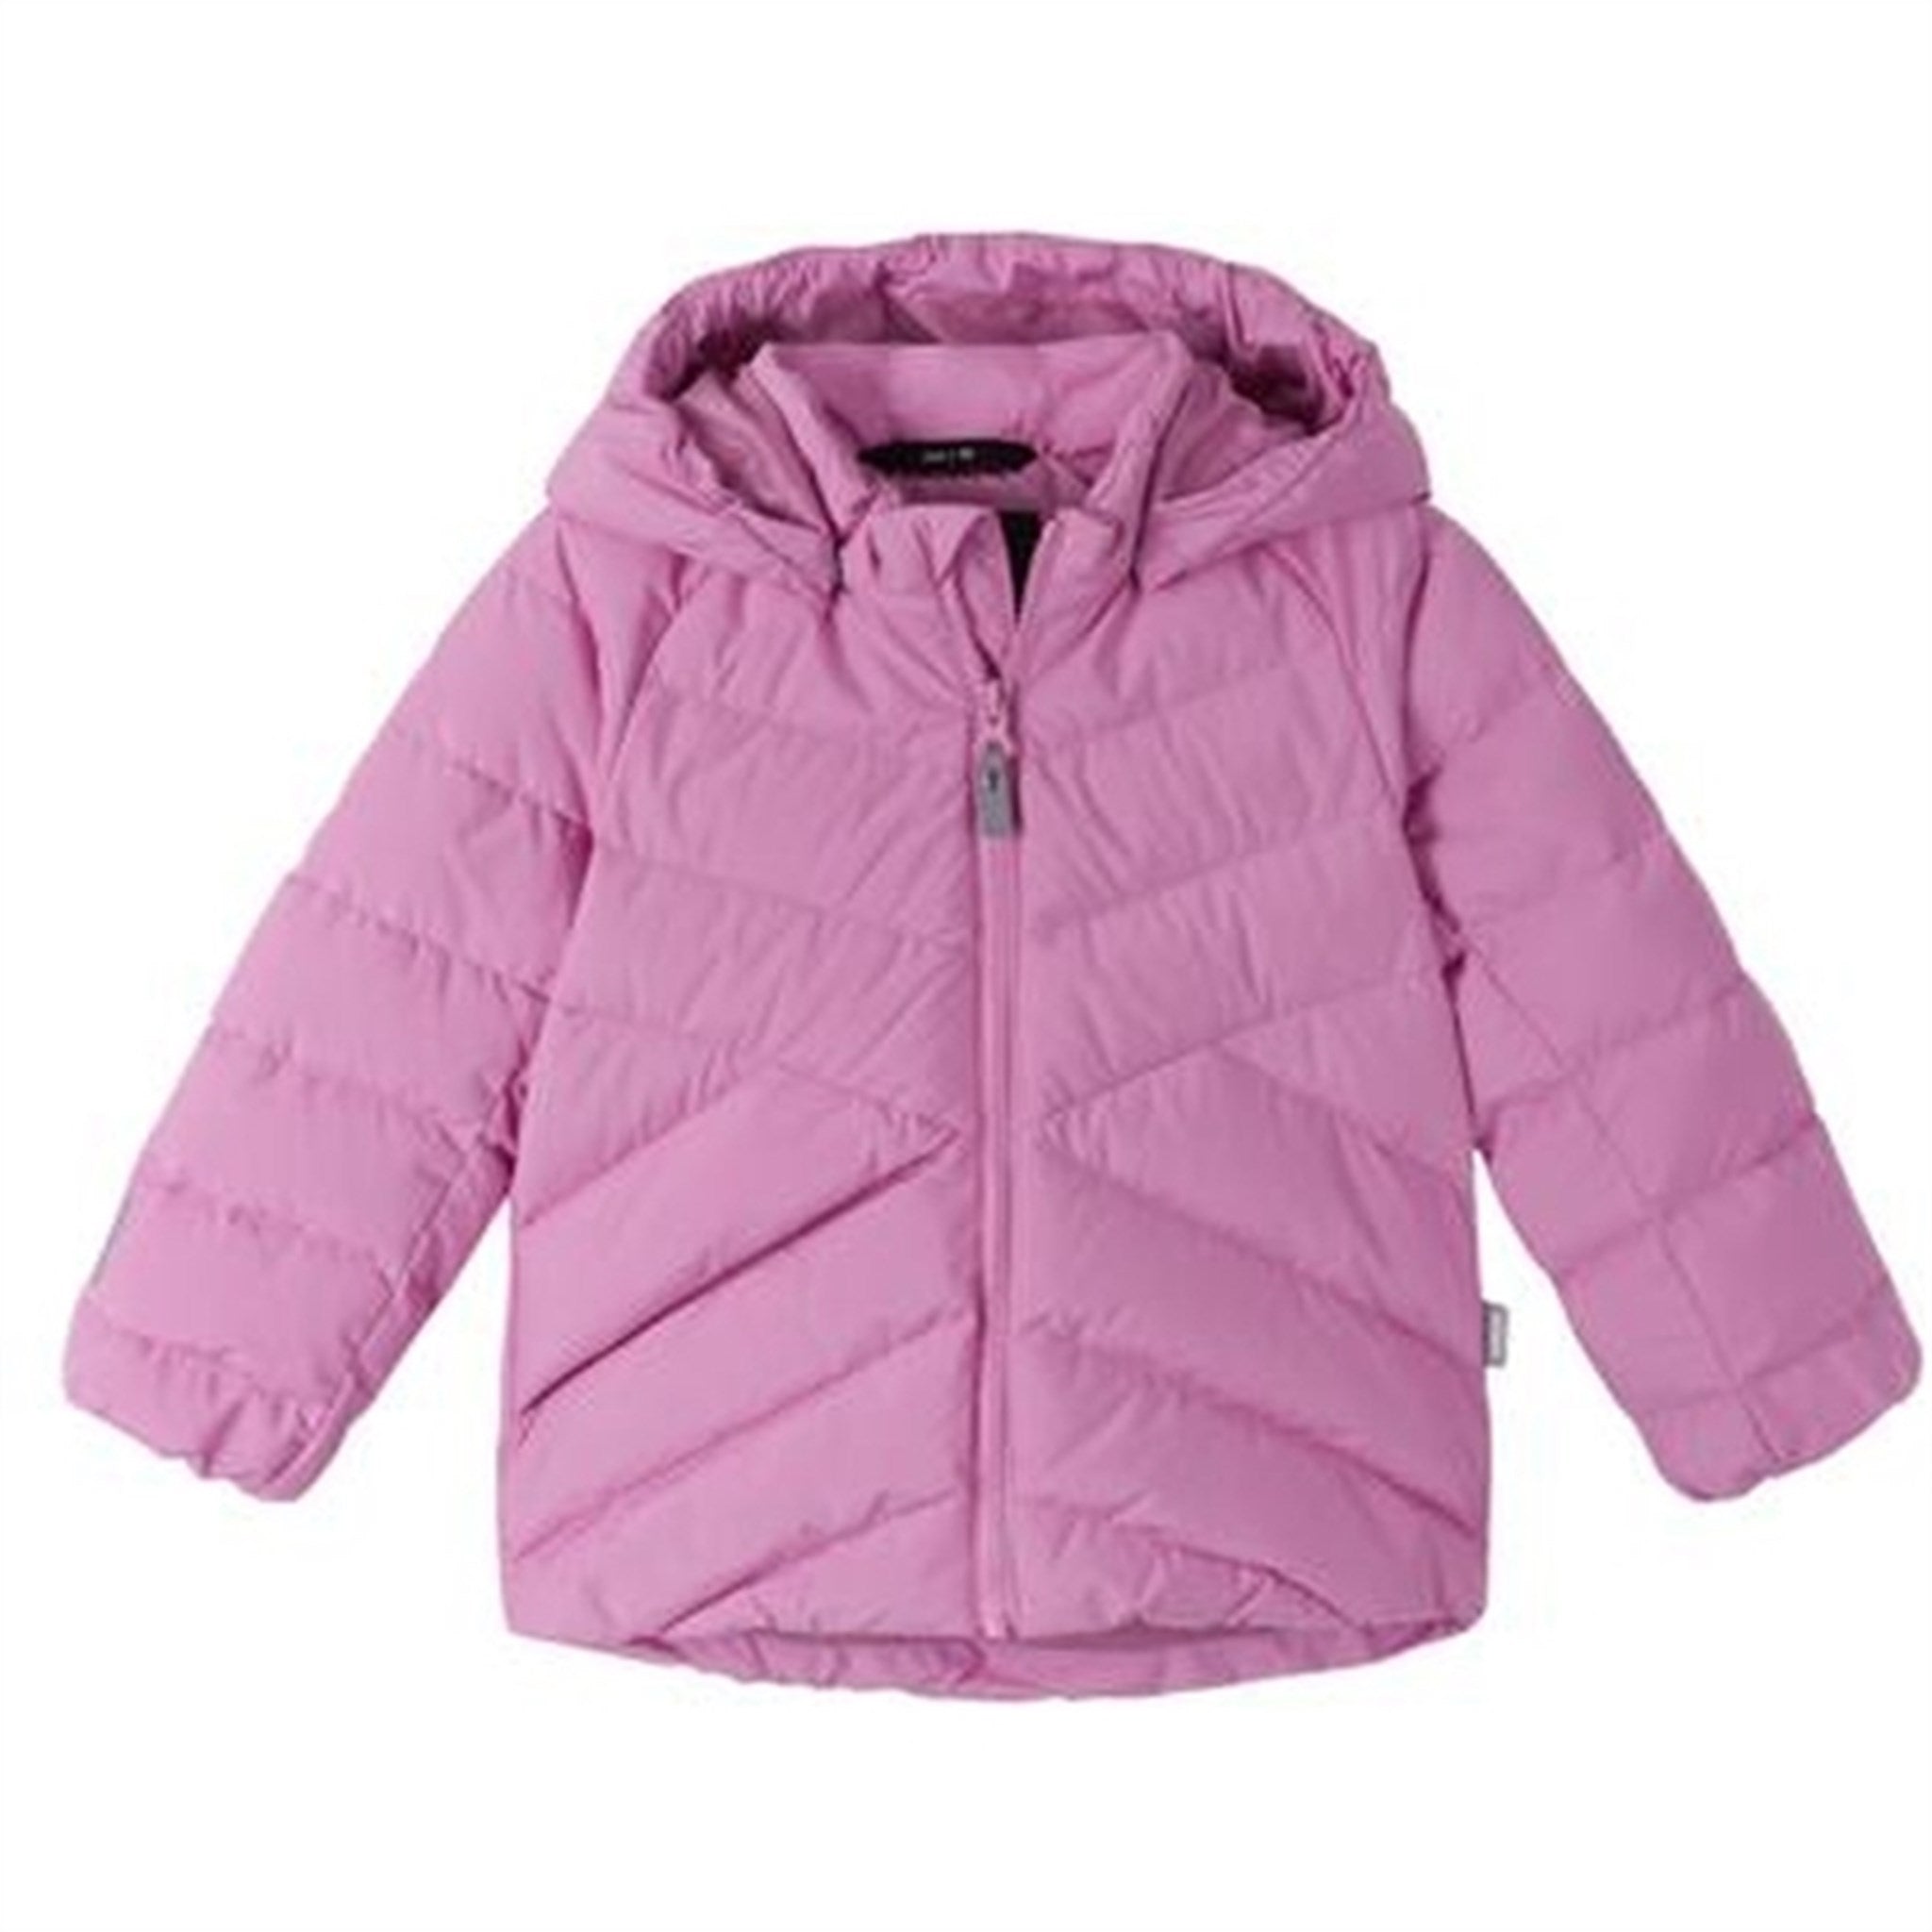 Reima Jacket Kupponen Cold Pink